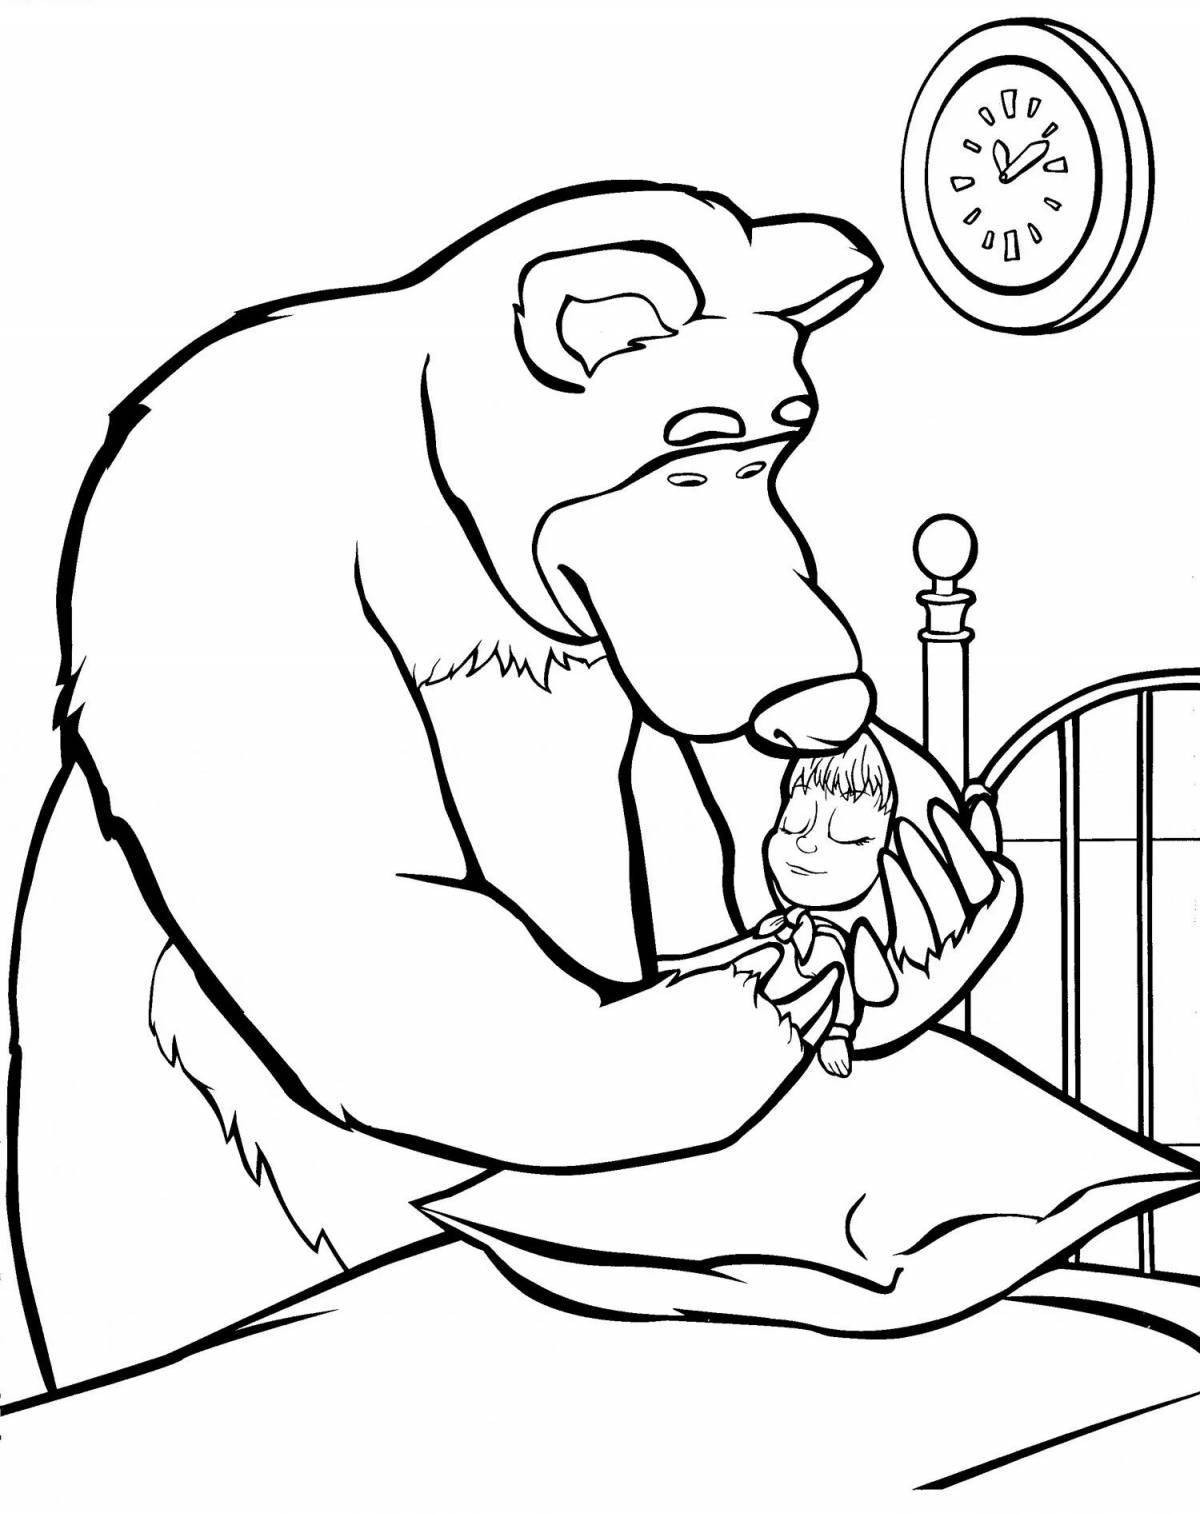 Entertaining drawing of masha and the bear